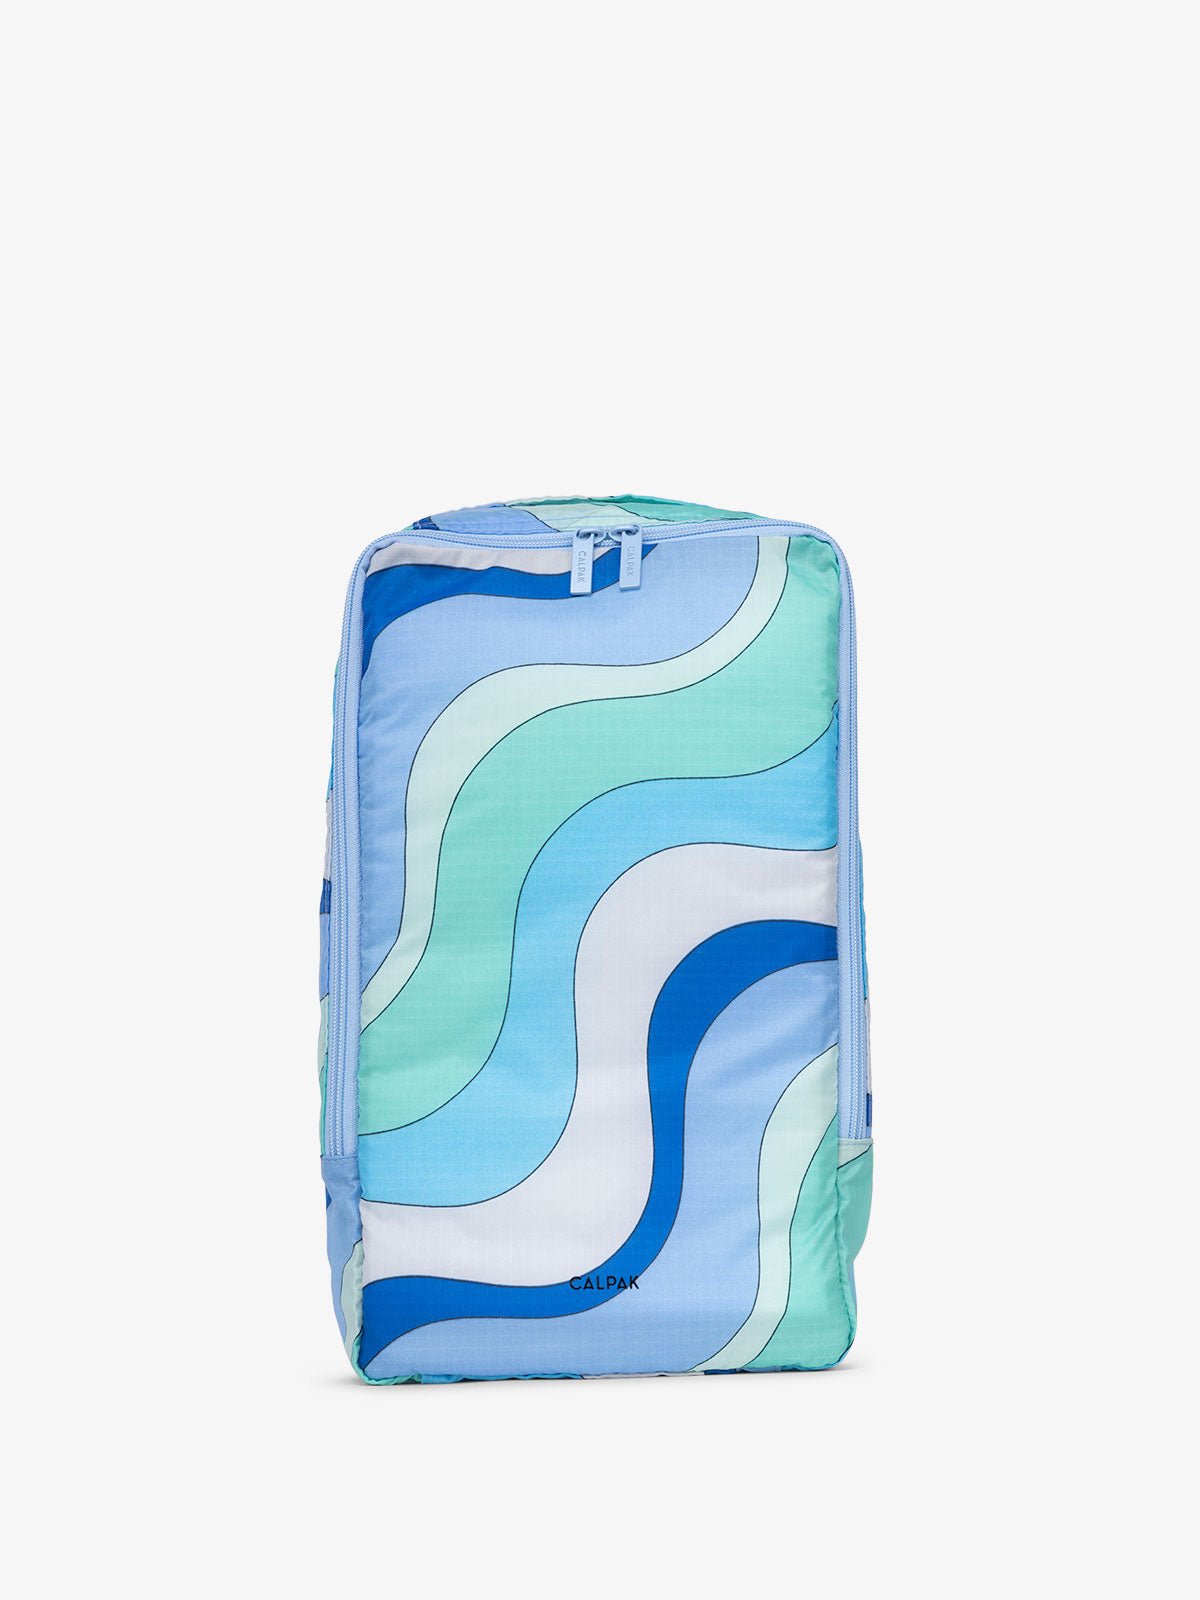 compakt shoe bag with wavy blue pattern